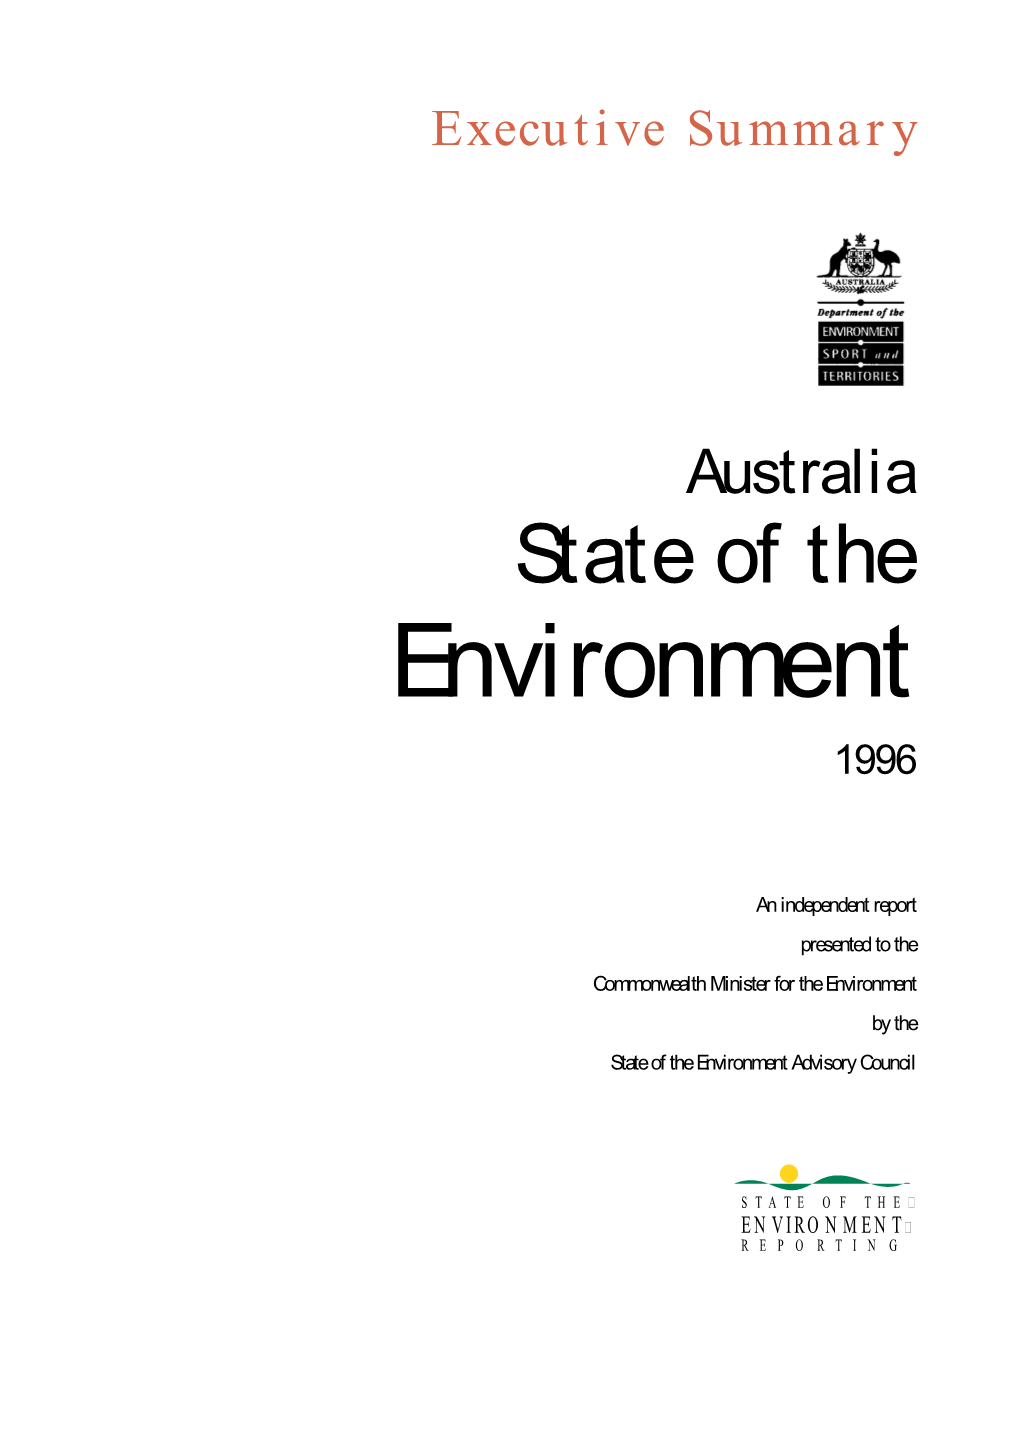 Australia State of the Environment 1996: Executive Summary